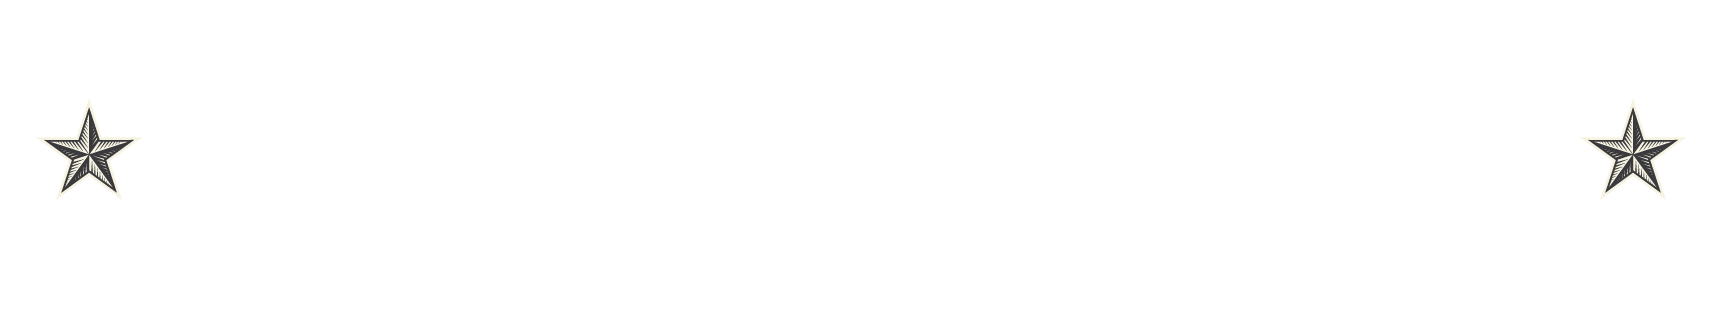 www.nrailafrontlines.com